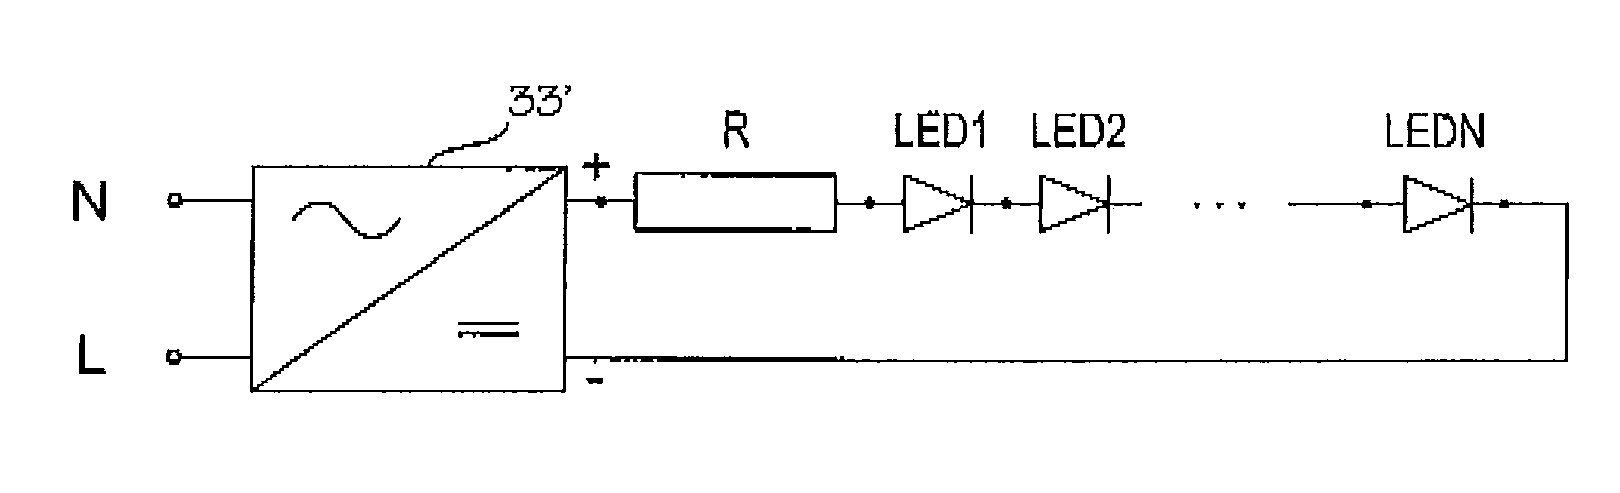 LED tube and lighting fixture arrangement